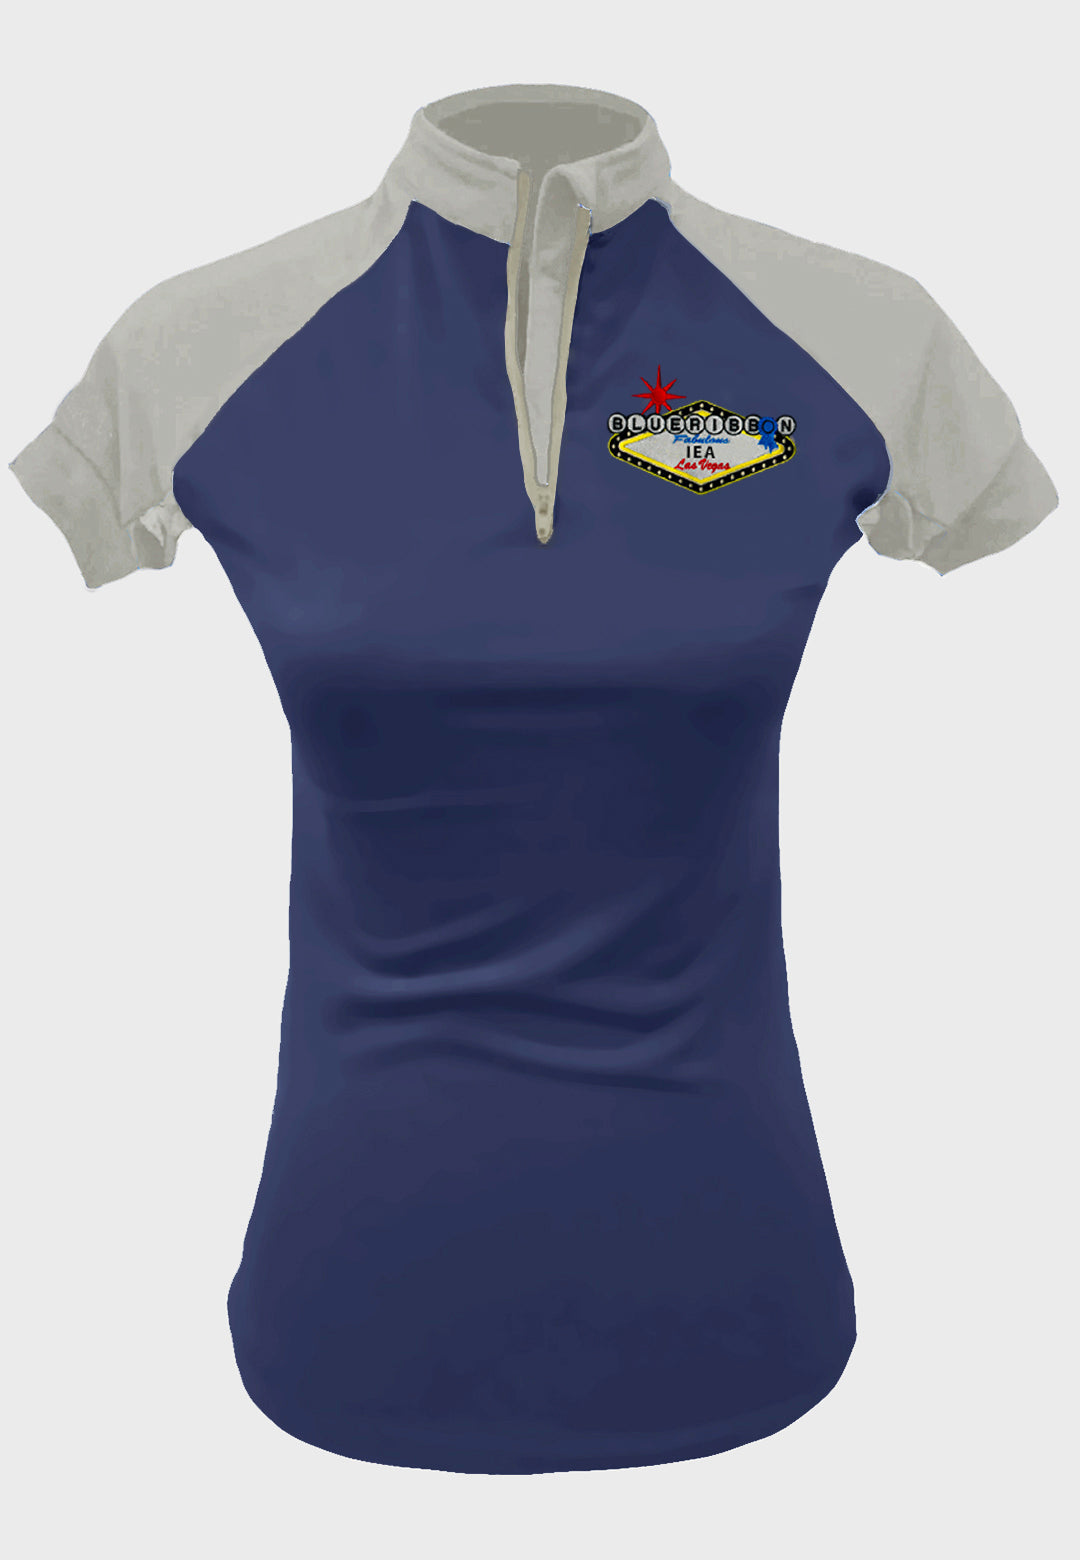 BRHJD Custom Short-Sleeve Navy Sun Shirt (IEA), Adult + Youth Sizes